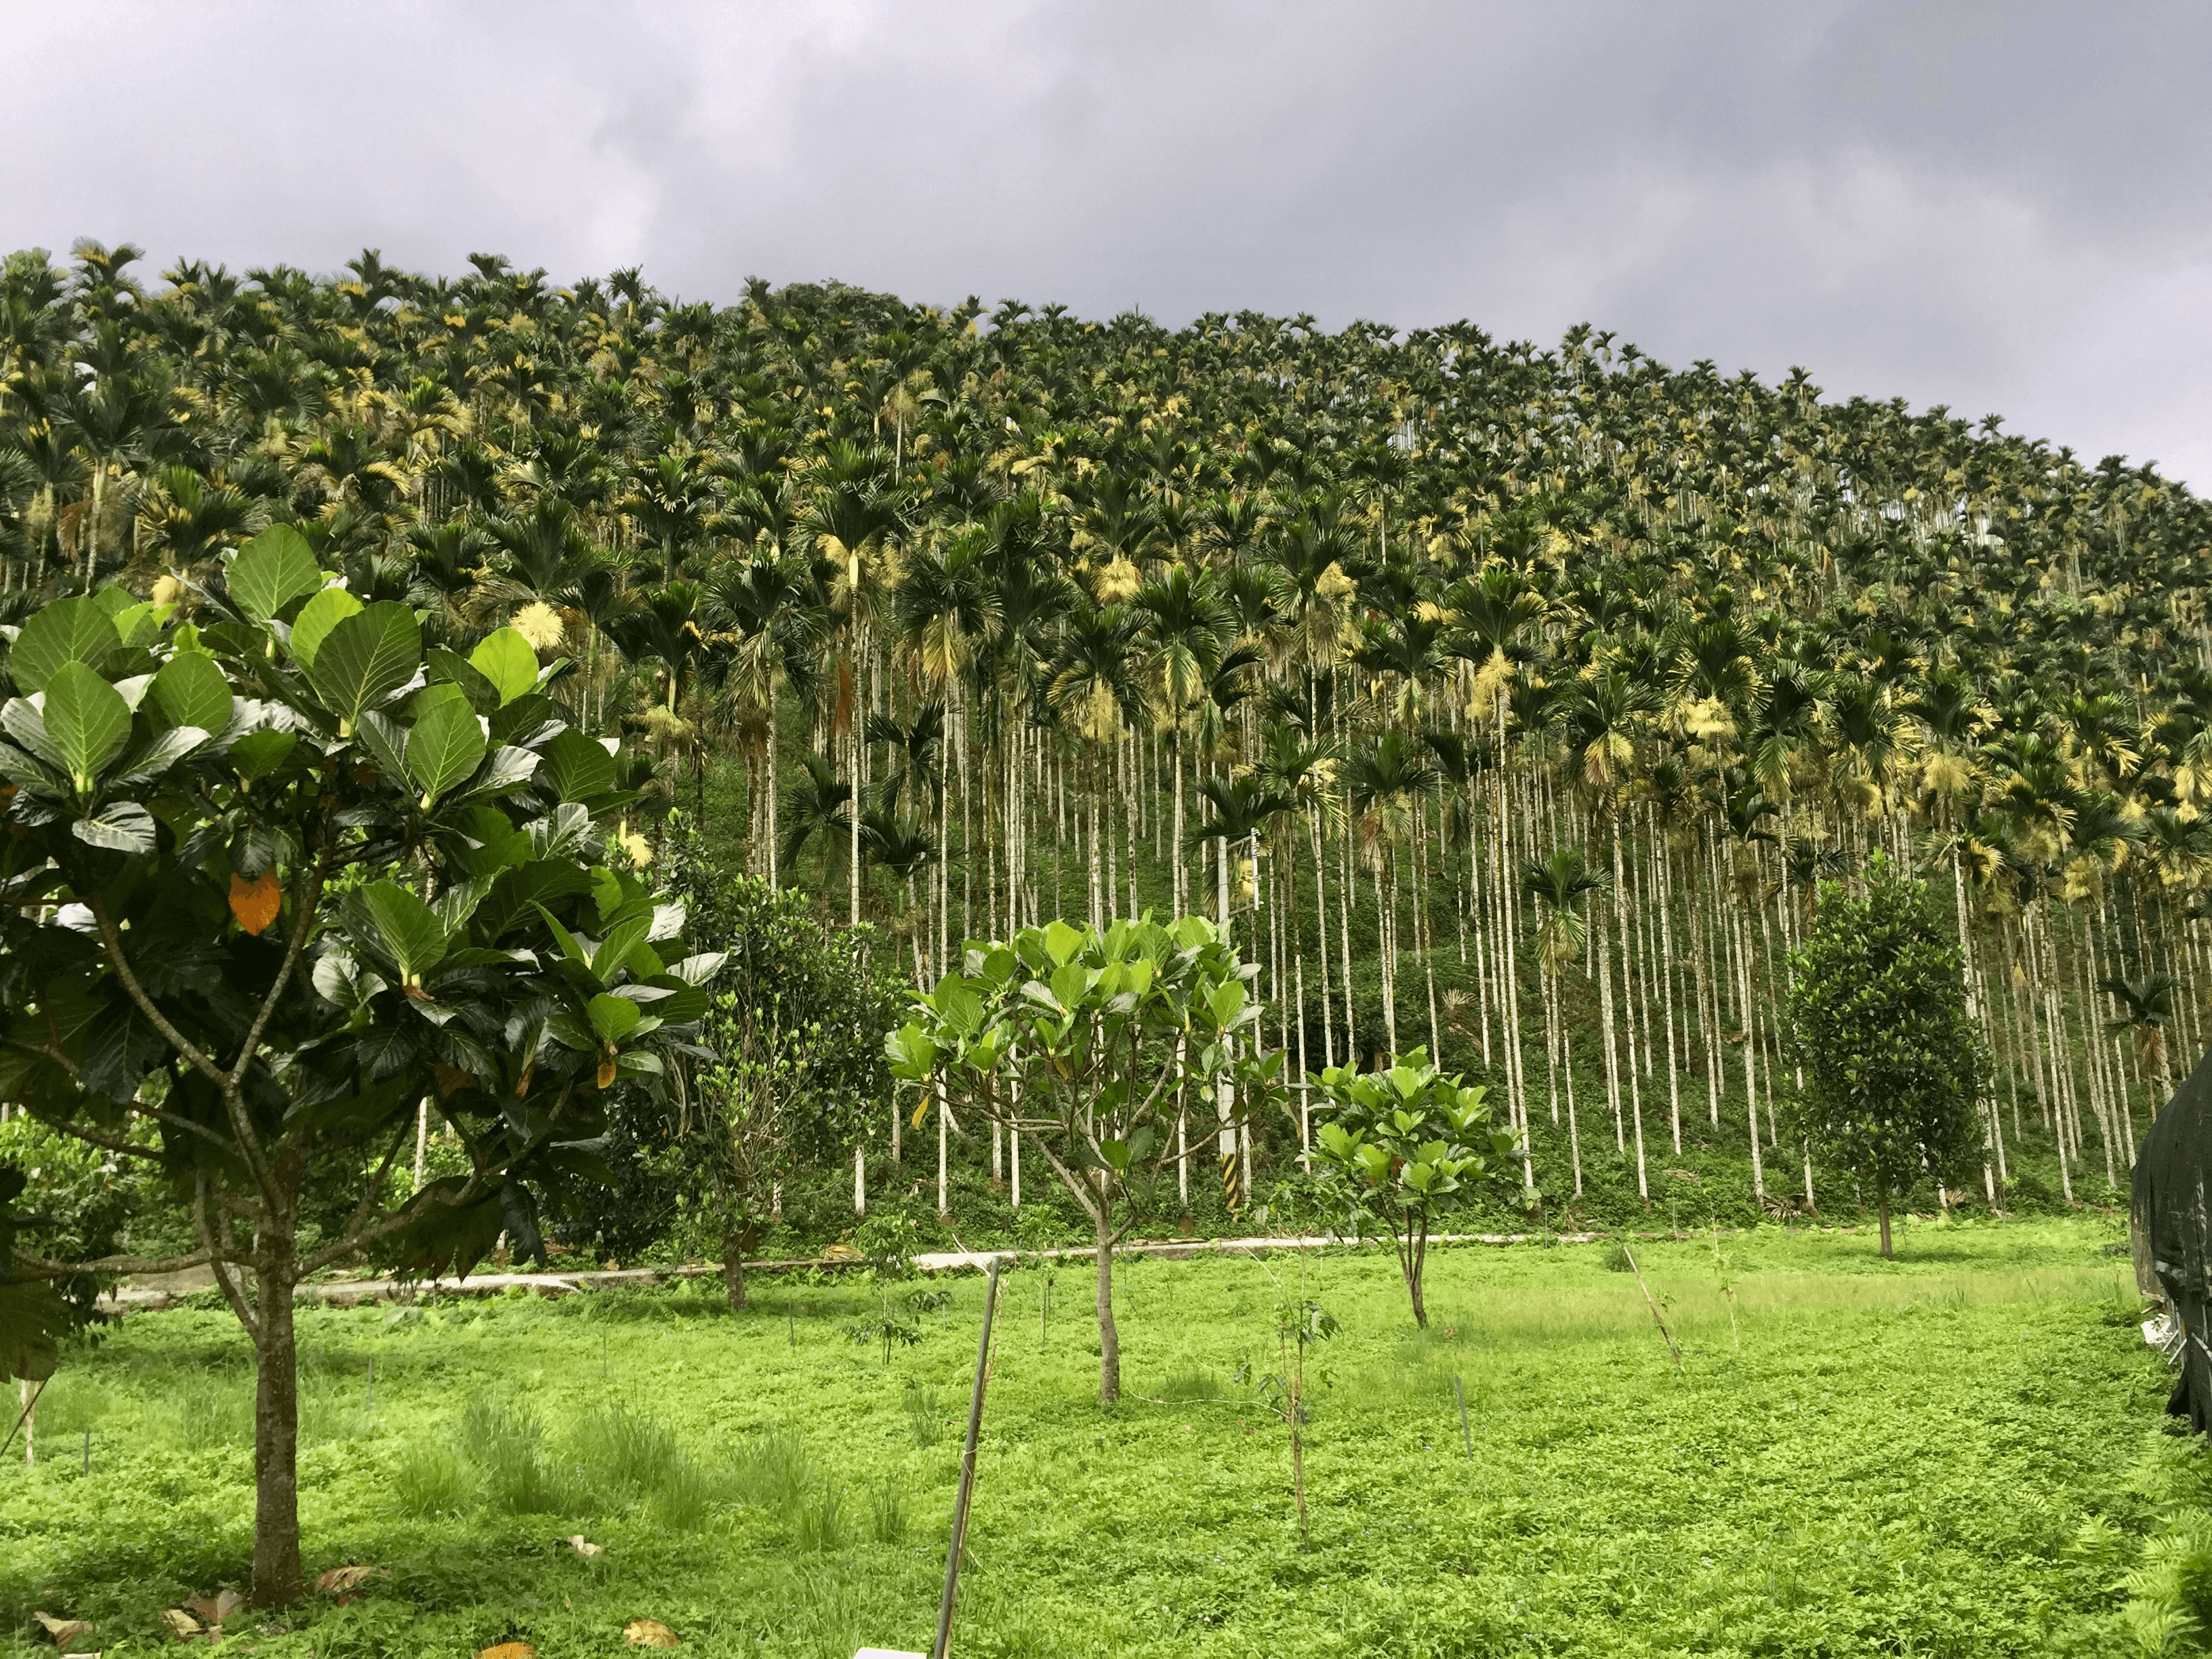 Betel nut trees in Yuchih